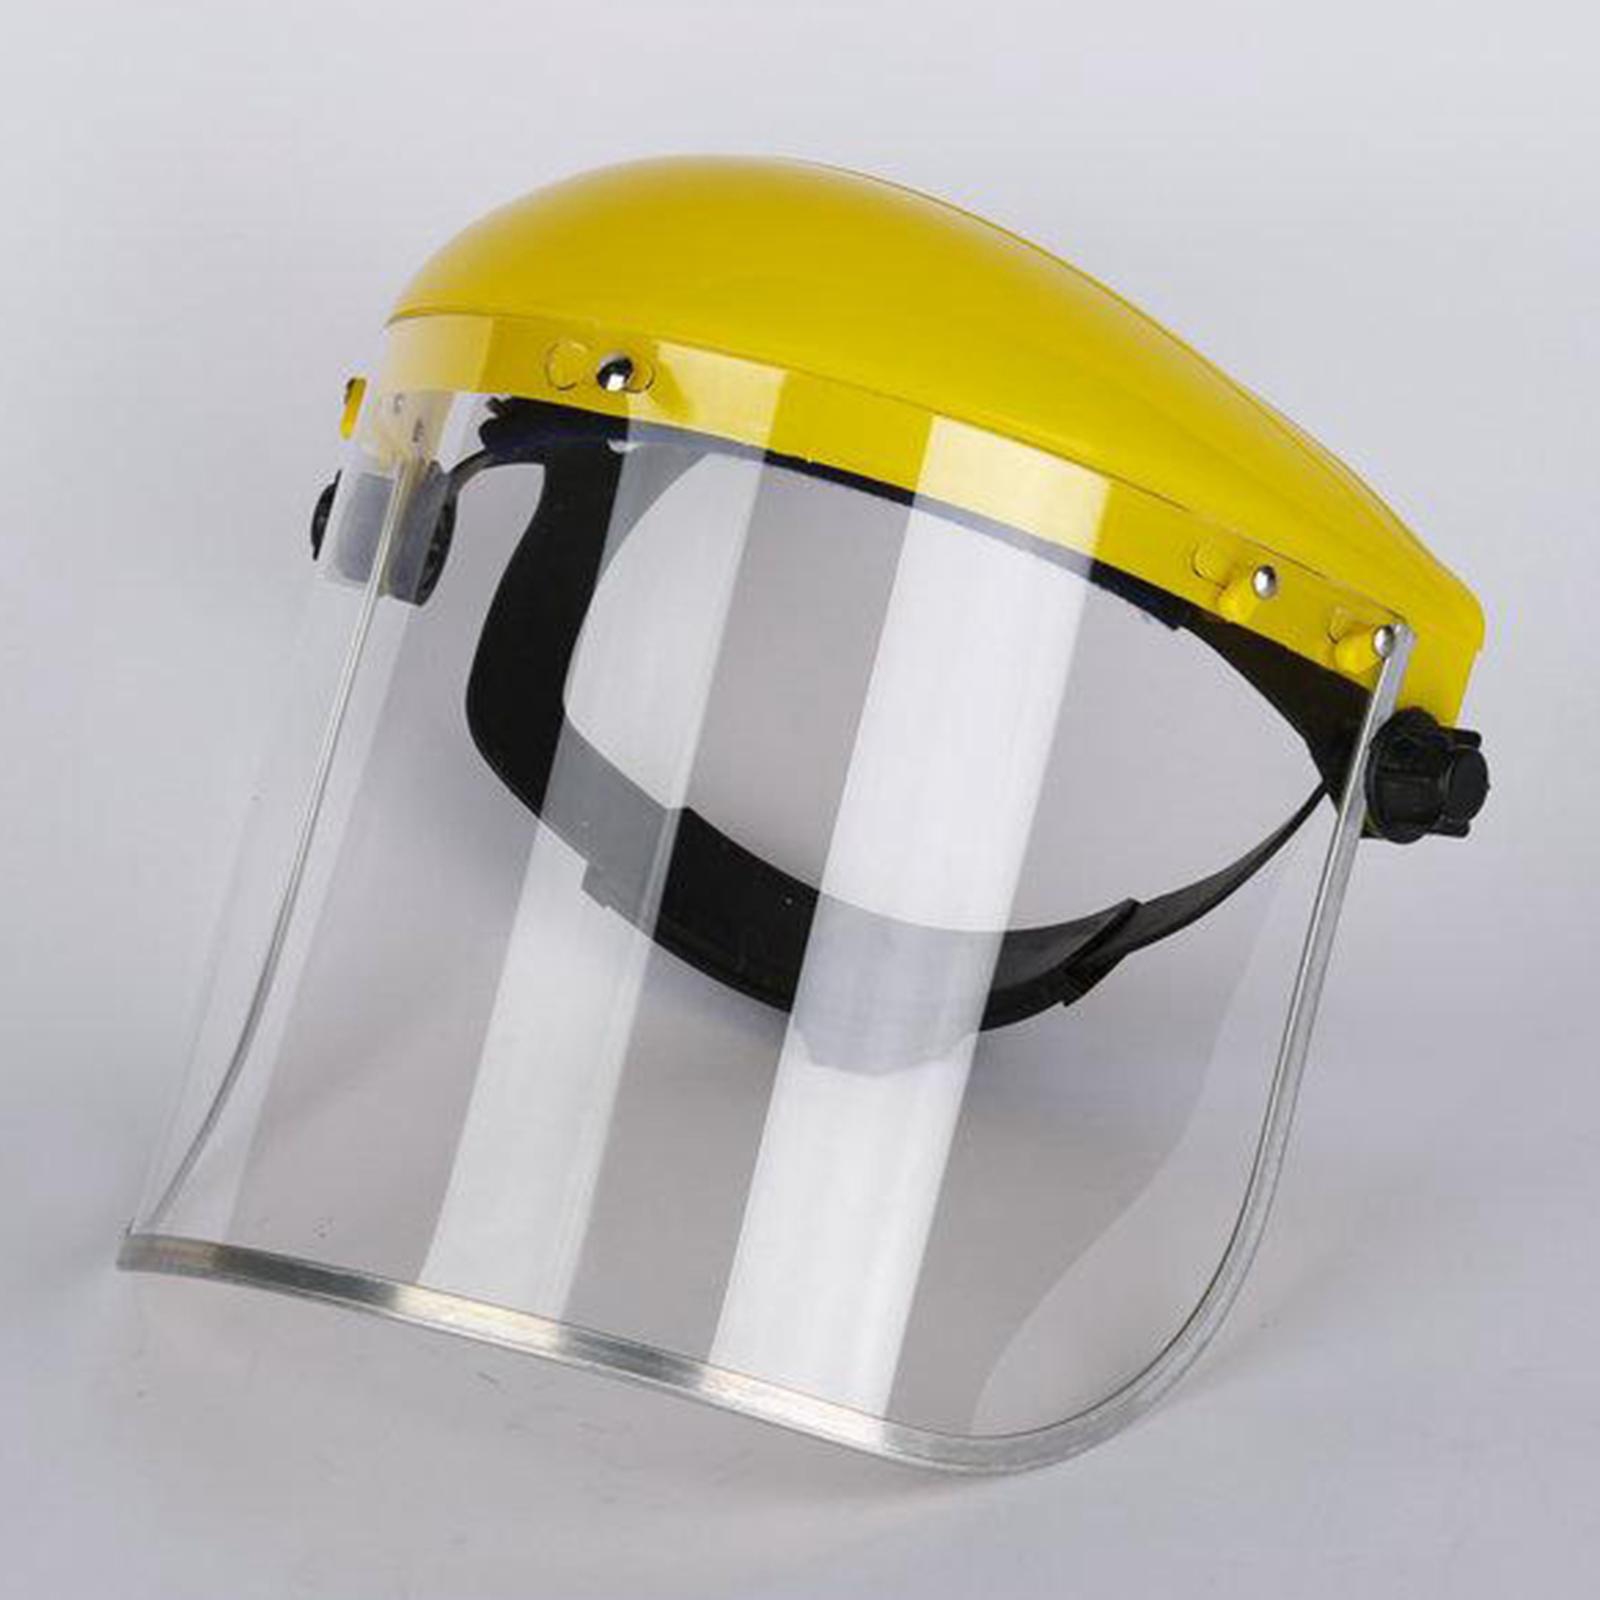 3xWelding Face Shield Clear Visor Film Safety Anti Splash Guard Face Cover